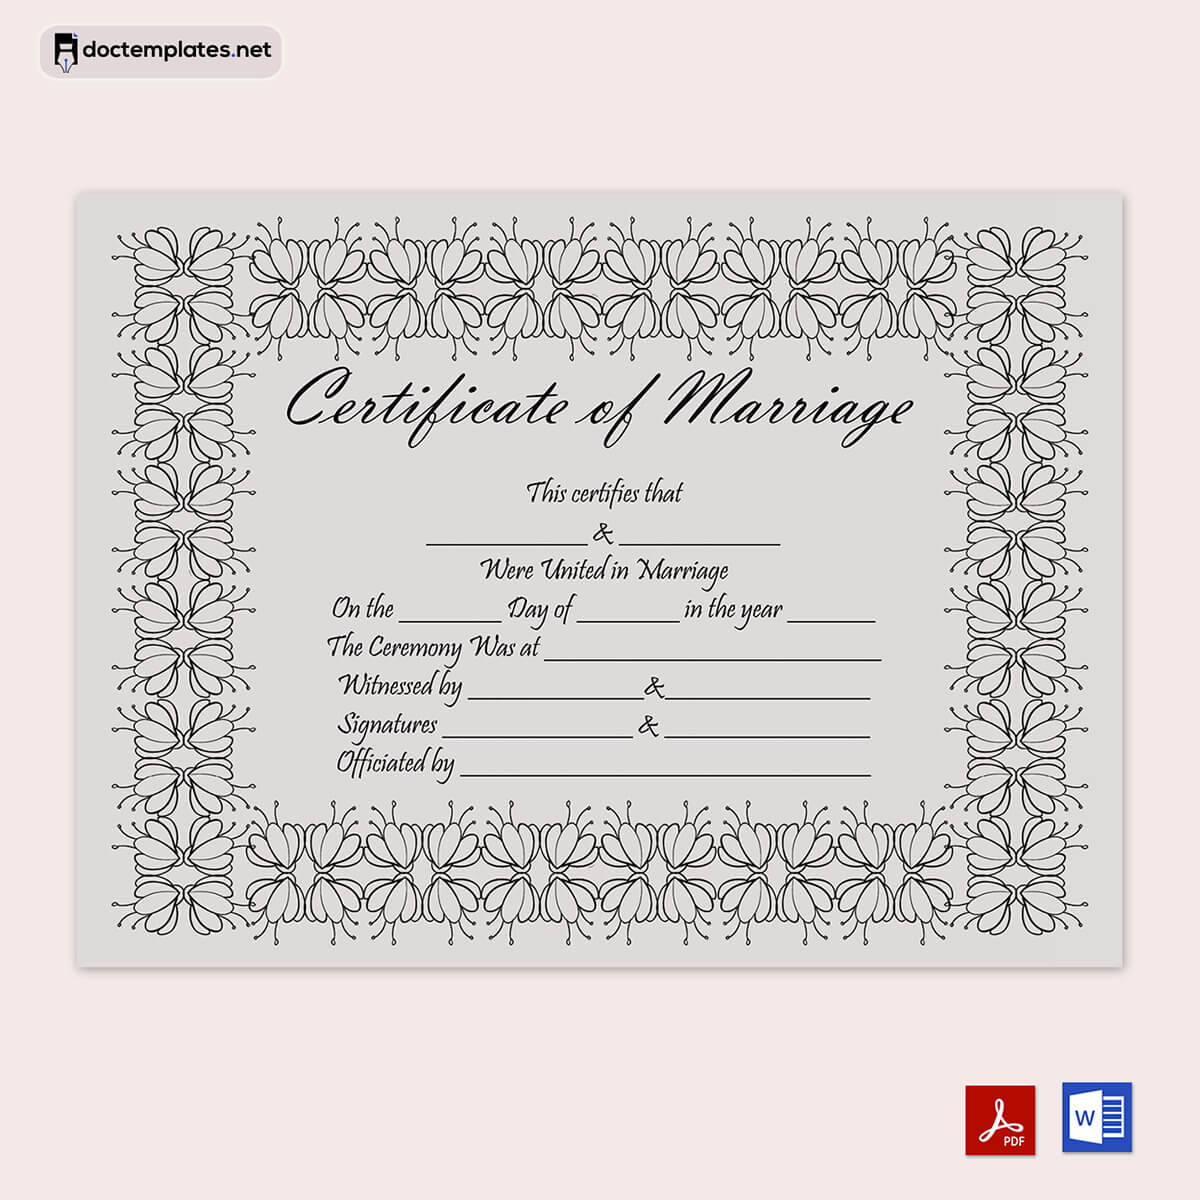  virtual marriage certificate 01